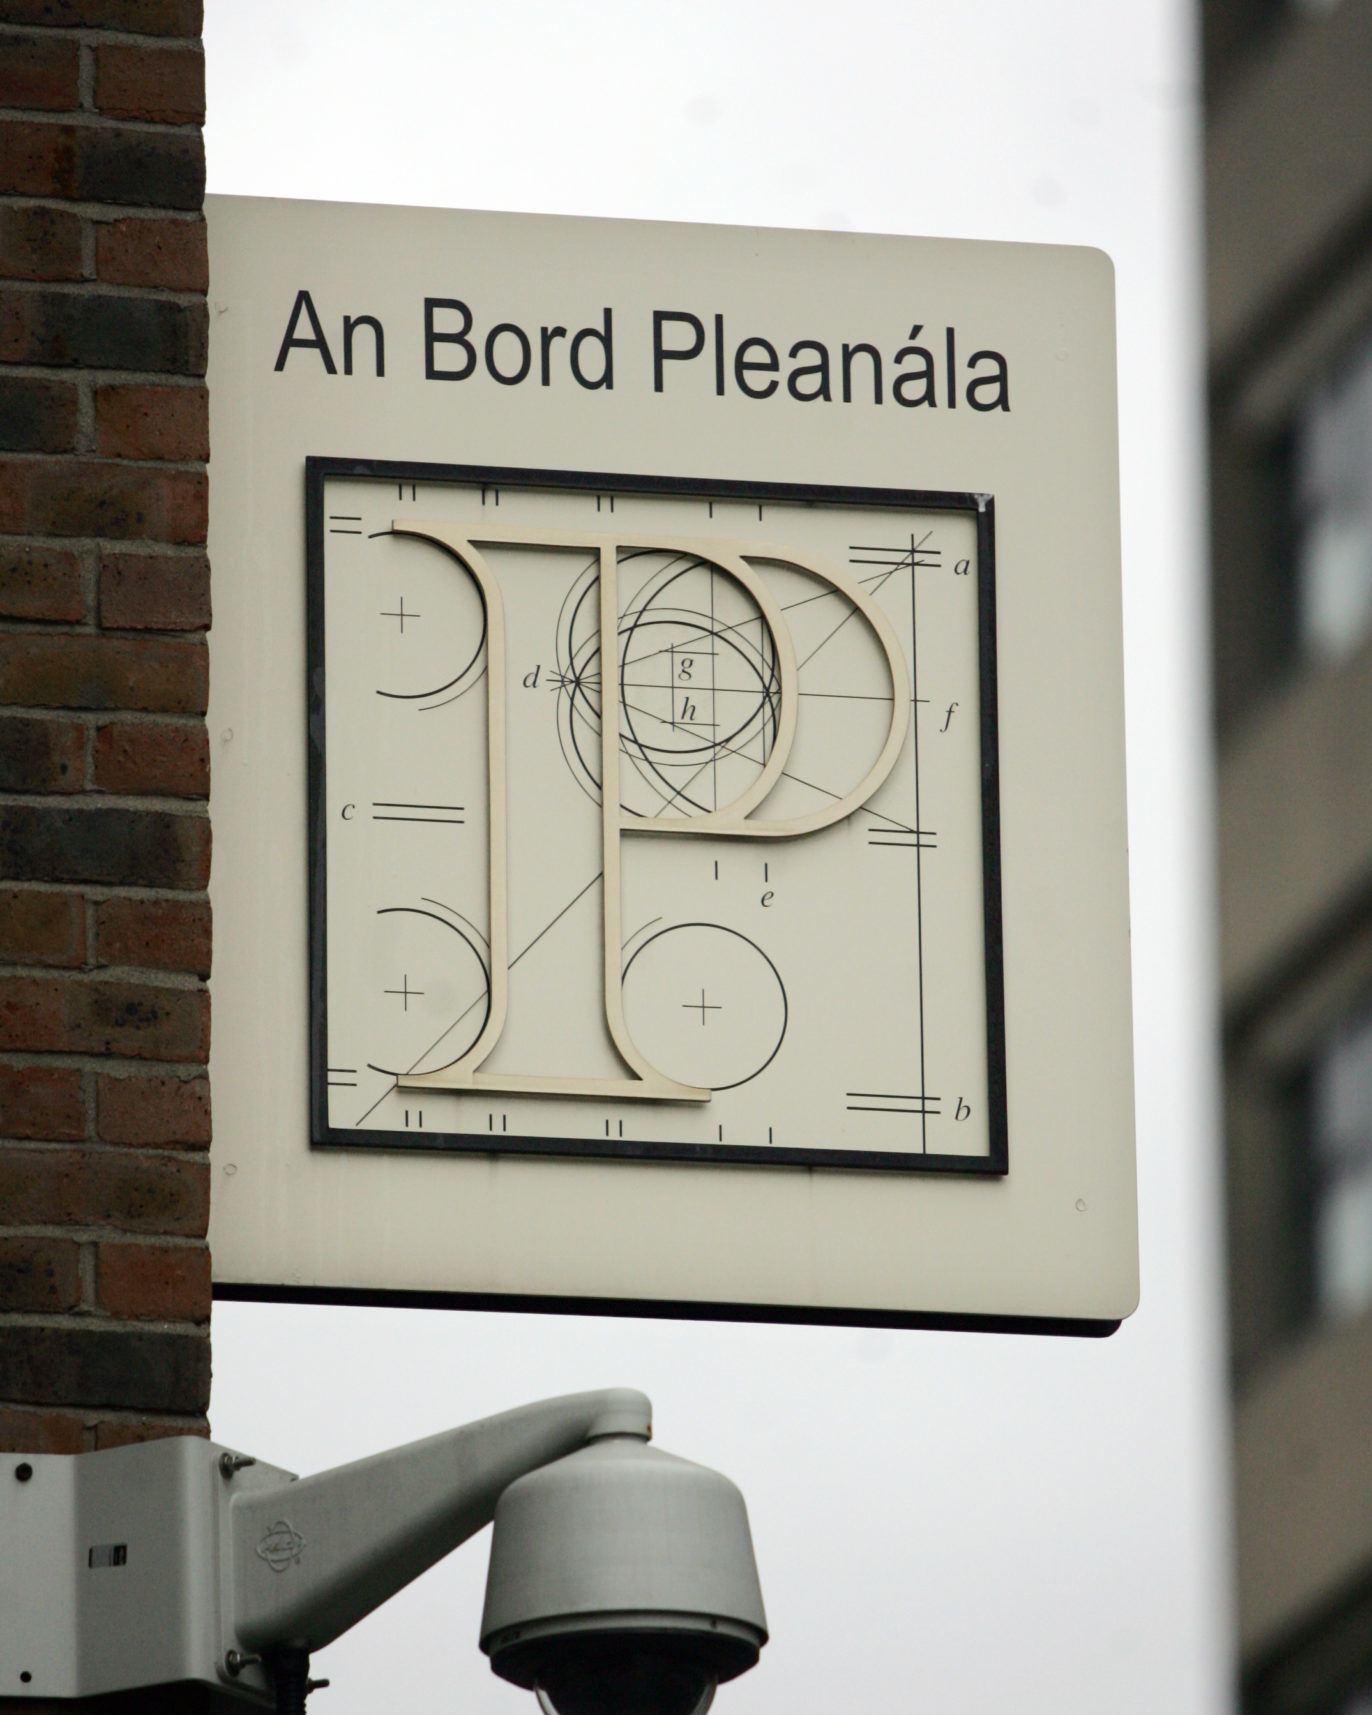 An Bord Pleanala offices in Dublin are seen in 2012